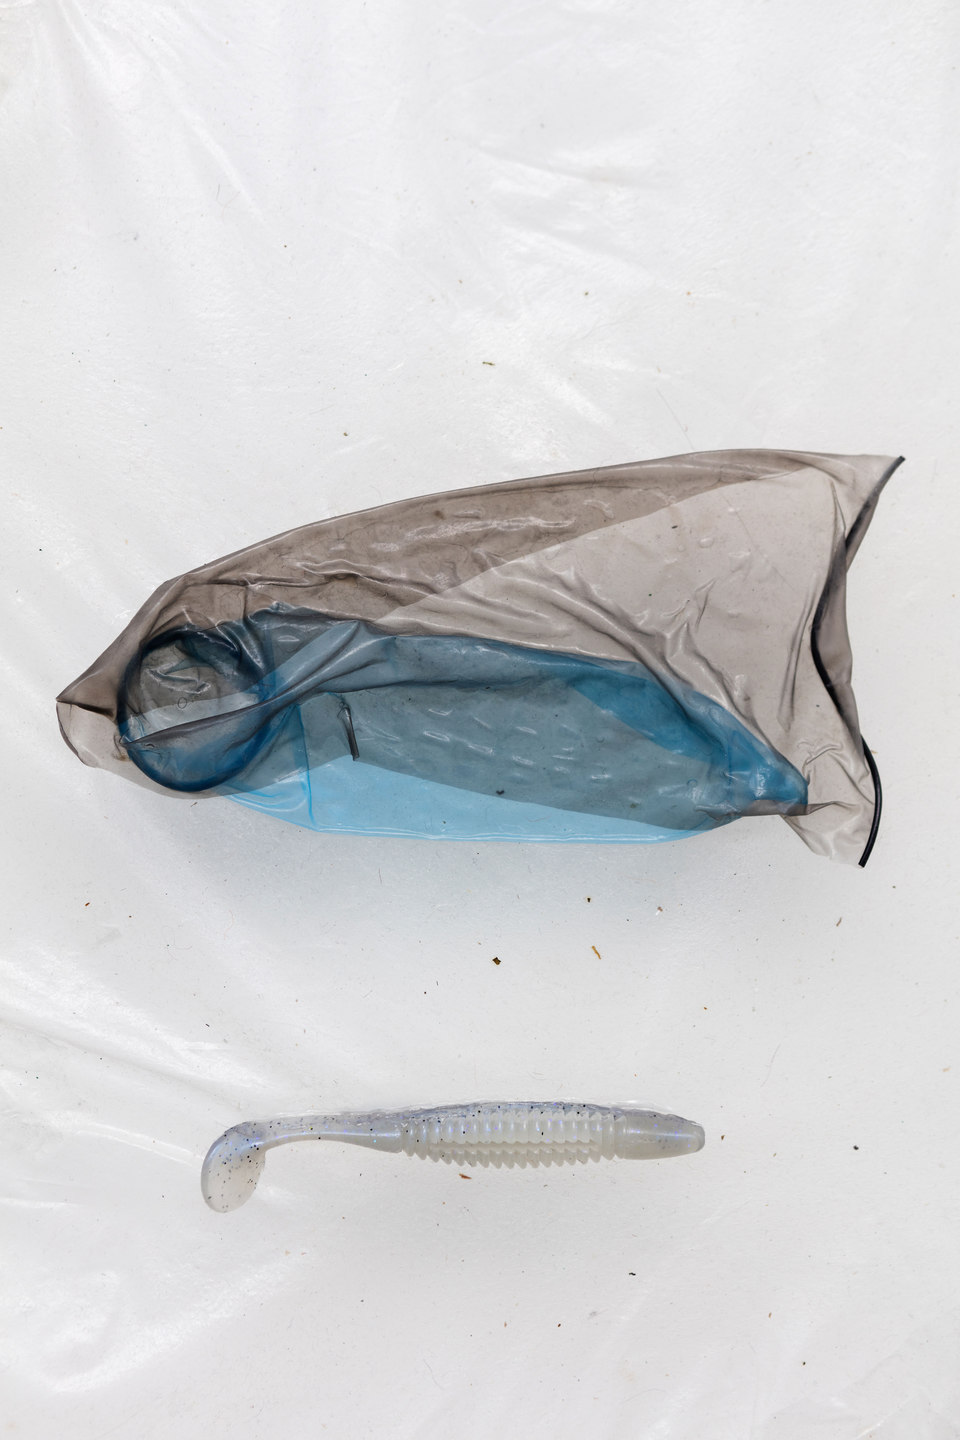 Aude Pariset, GREENHOUSES, 'Stallion Dad' [detail], Bioplastic, UV print on bioplastic, condoms, fish bait, wood, paint, 60 x 90cm, 2016, Cell Project Space